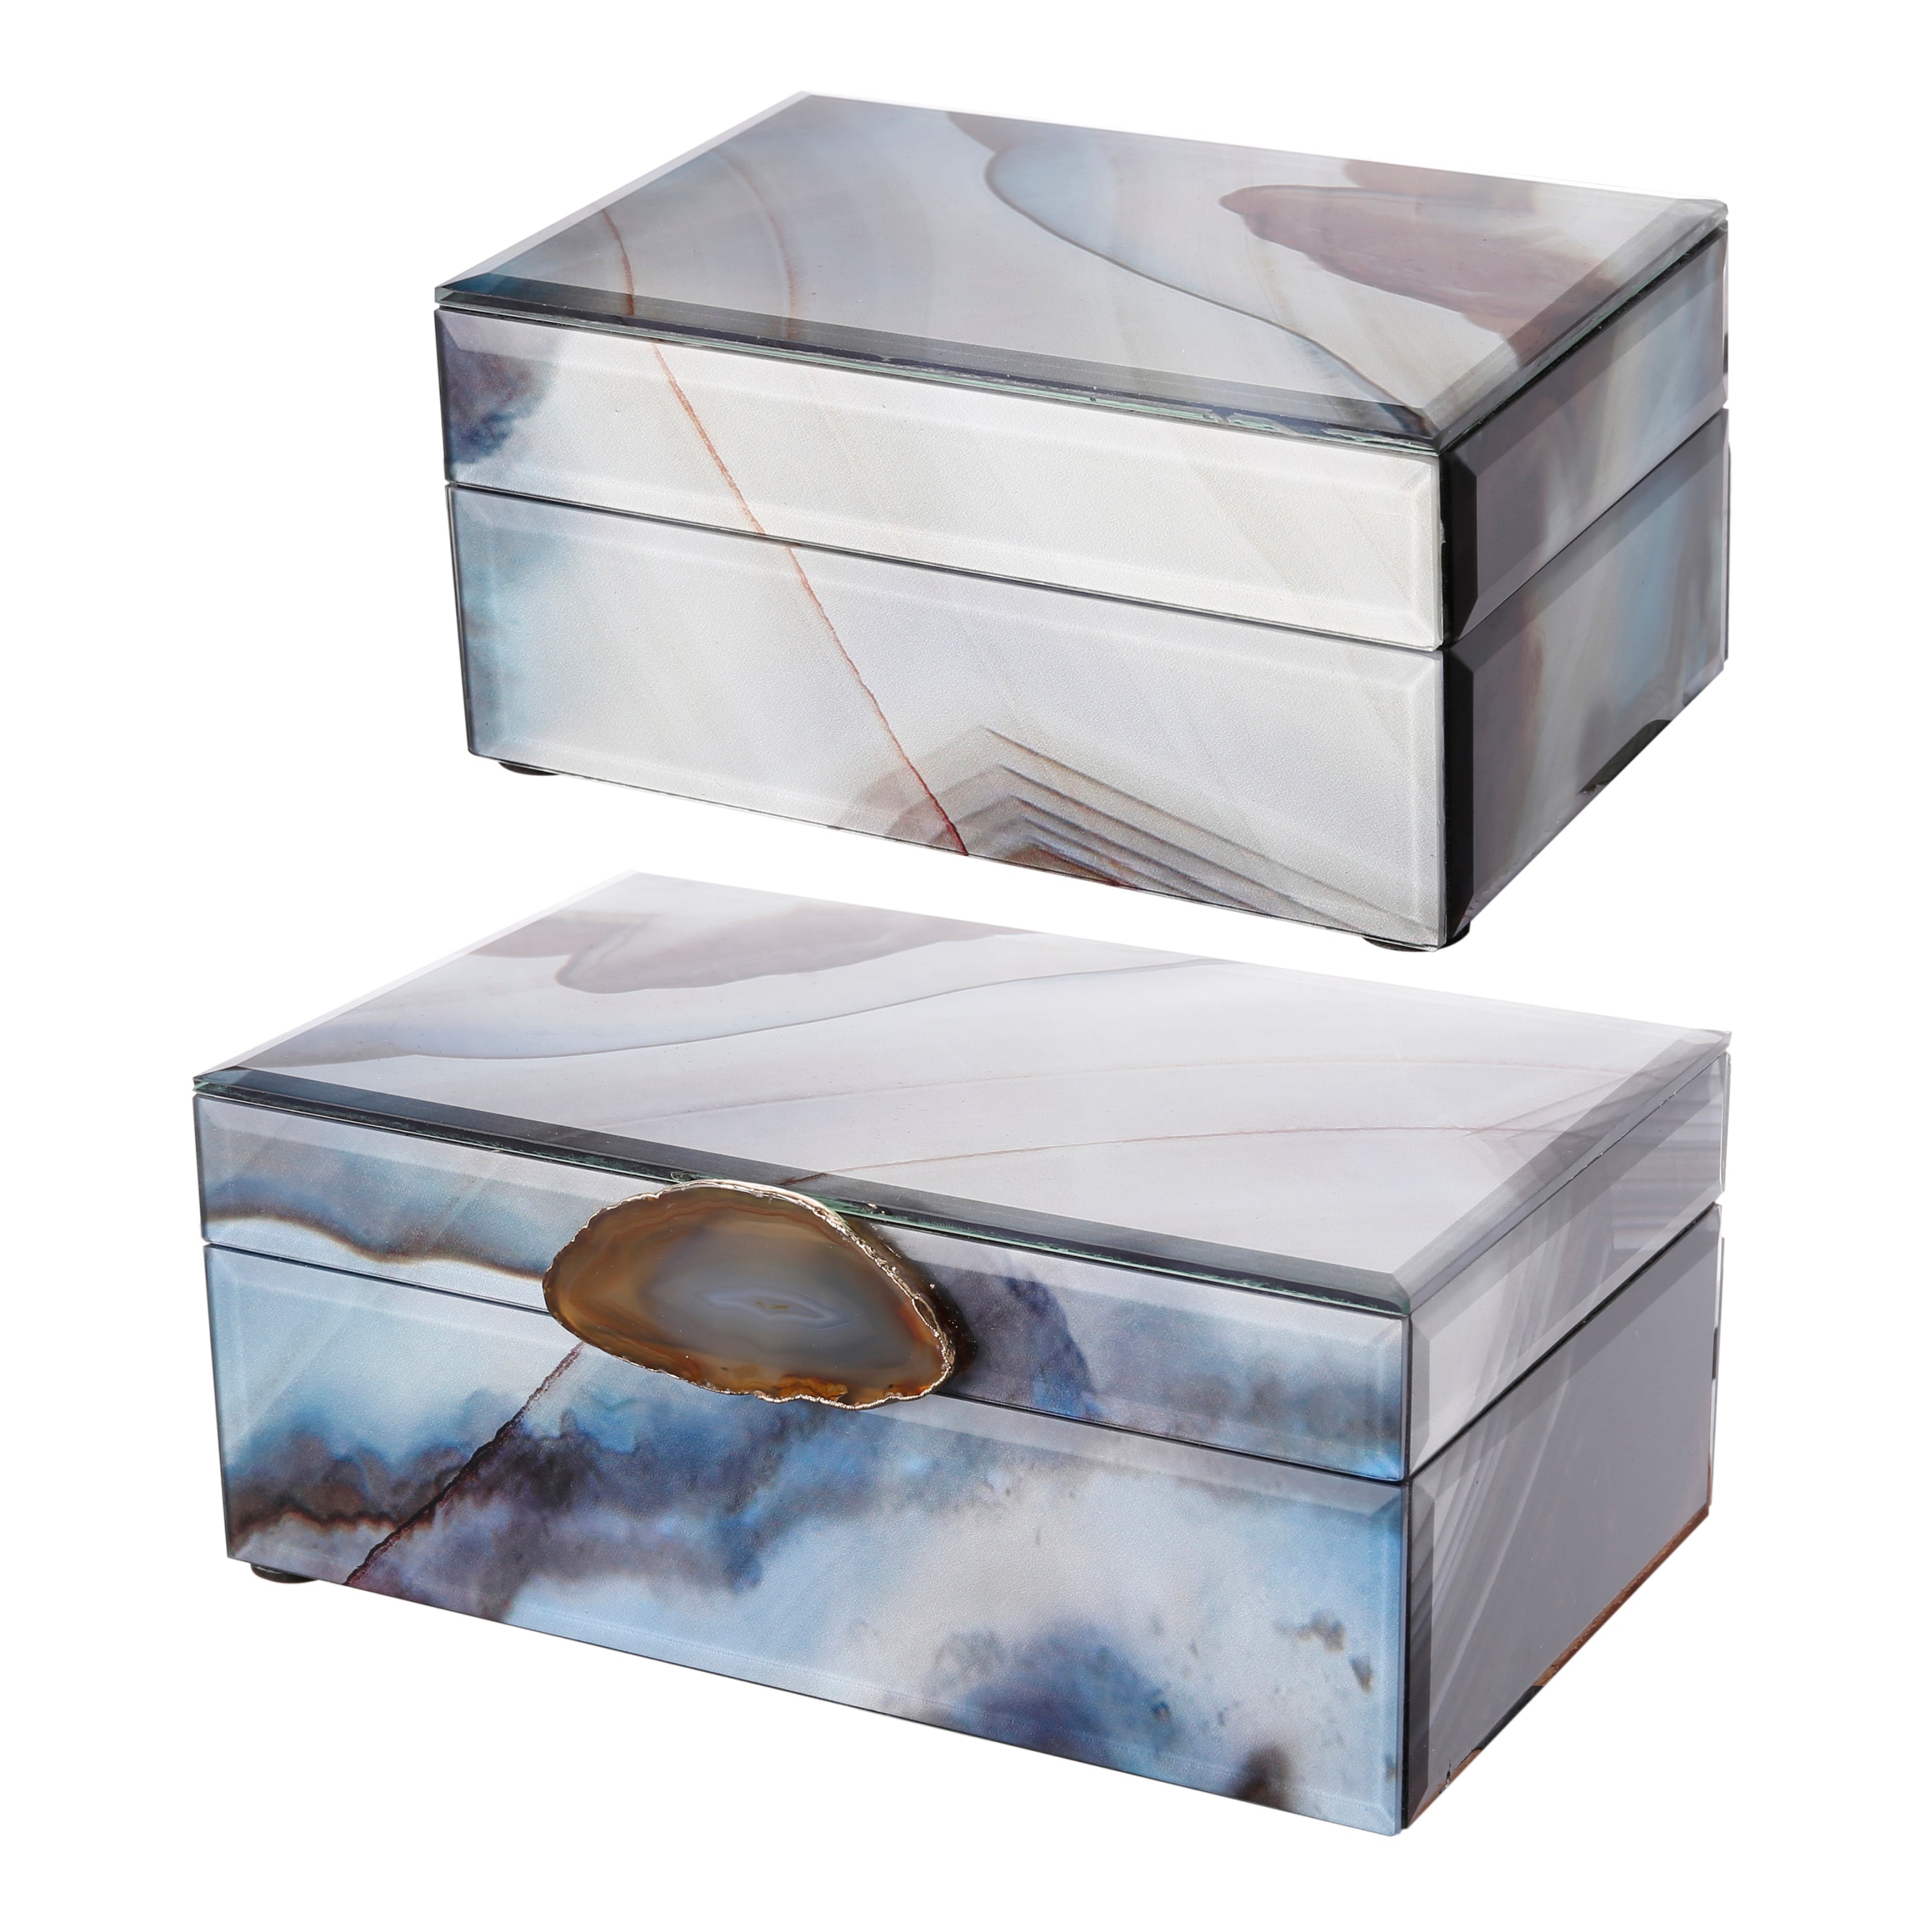 Set-of-2-Decorative-Nesting-Jewelry-Boxes,-Stackable-Decorative-Storage-Boxes-With-Lids-Jewelry-Holders